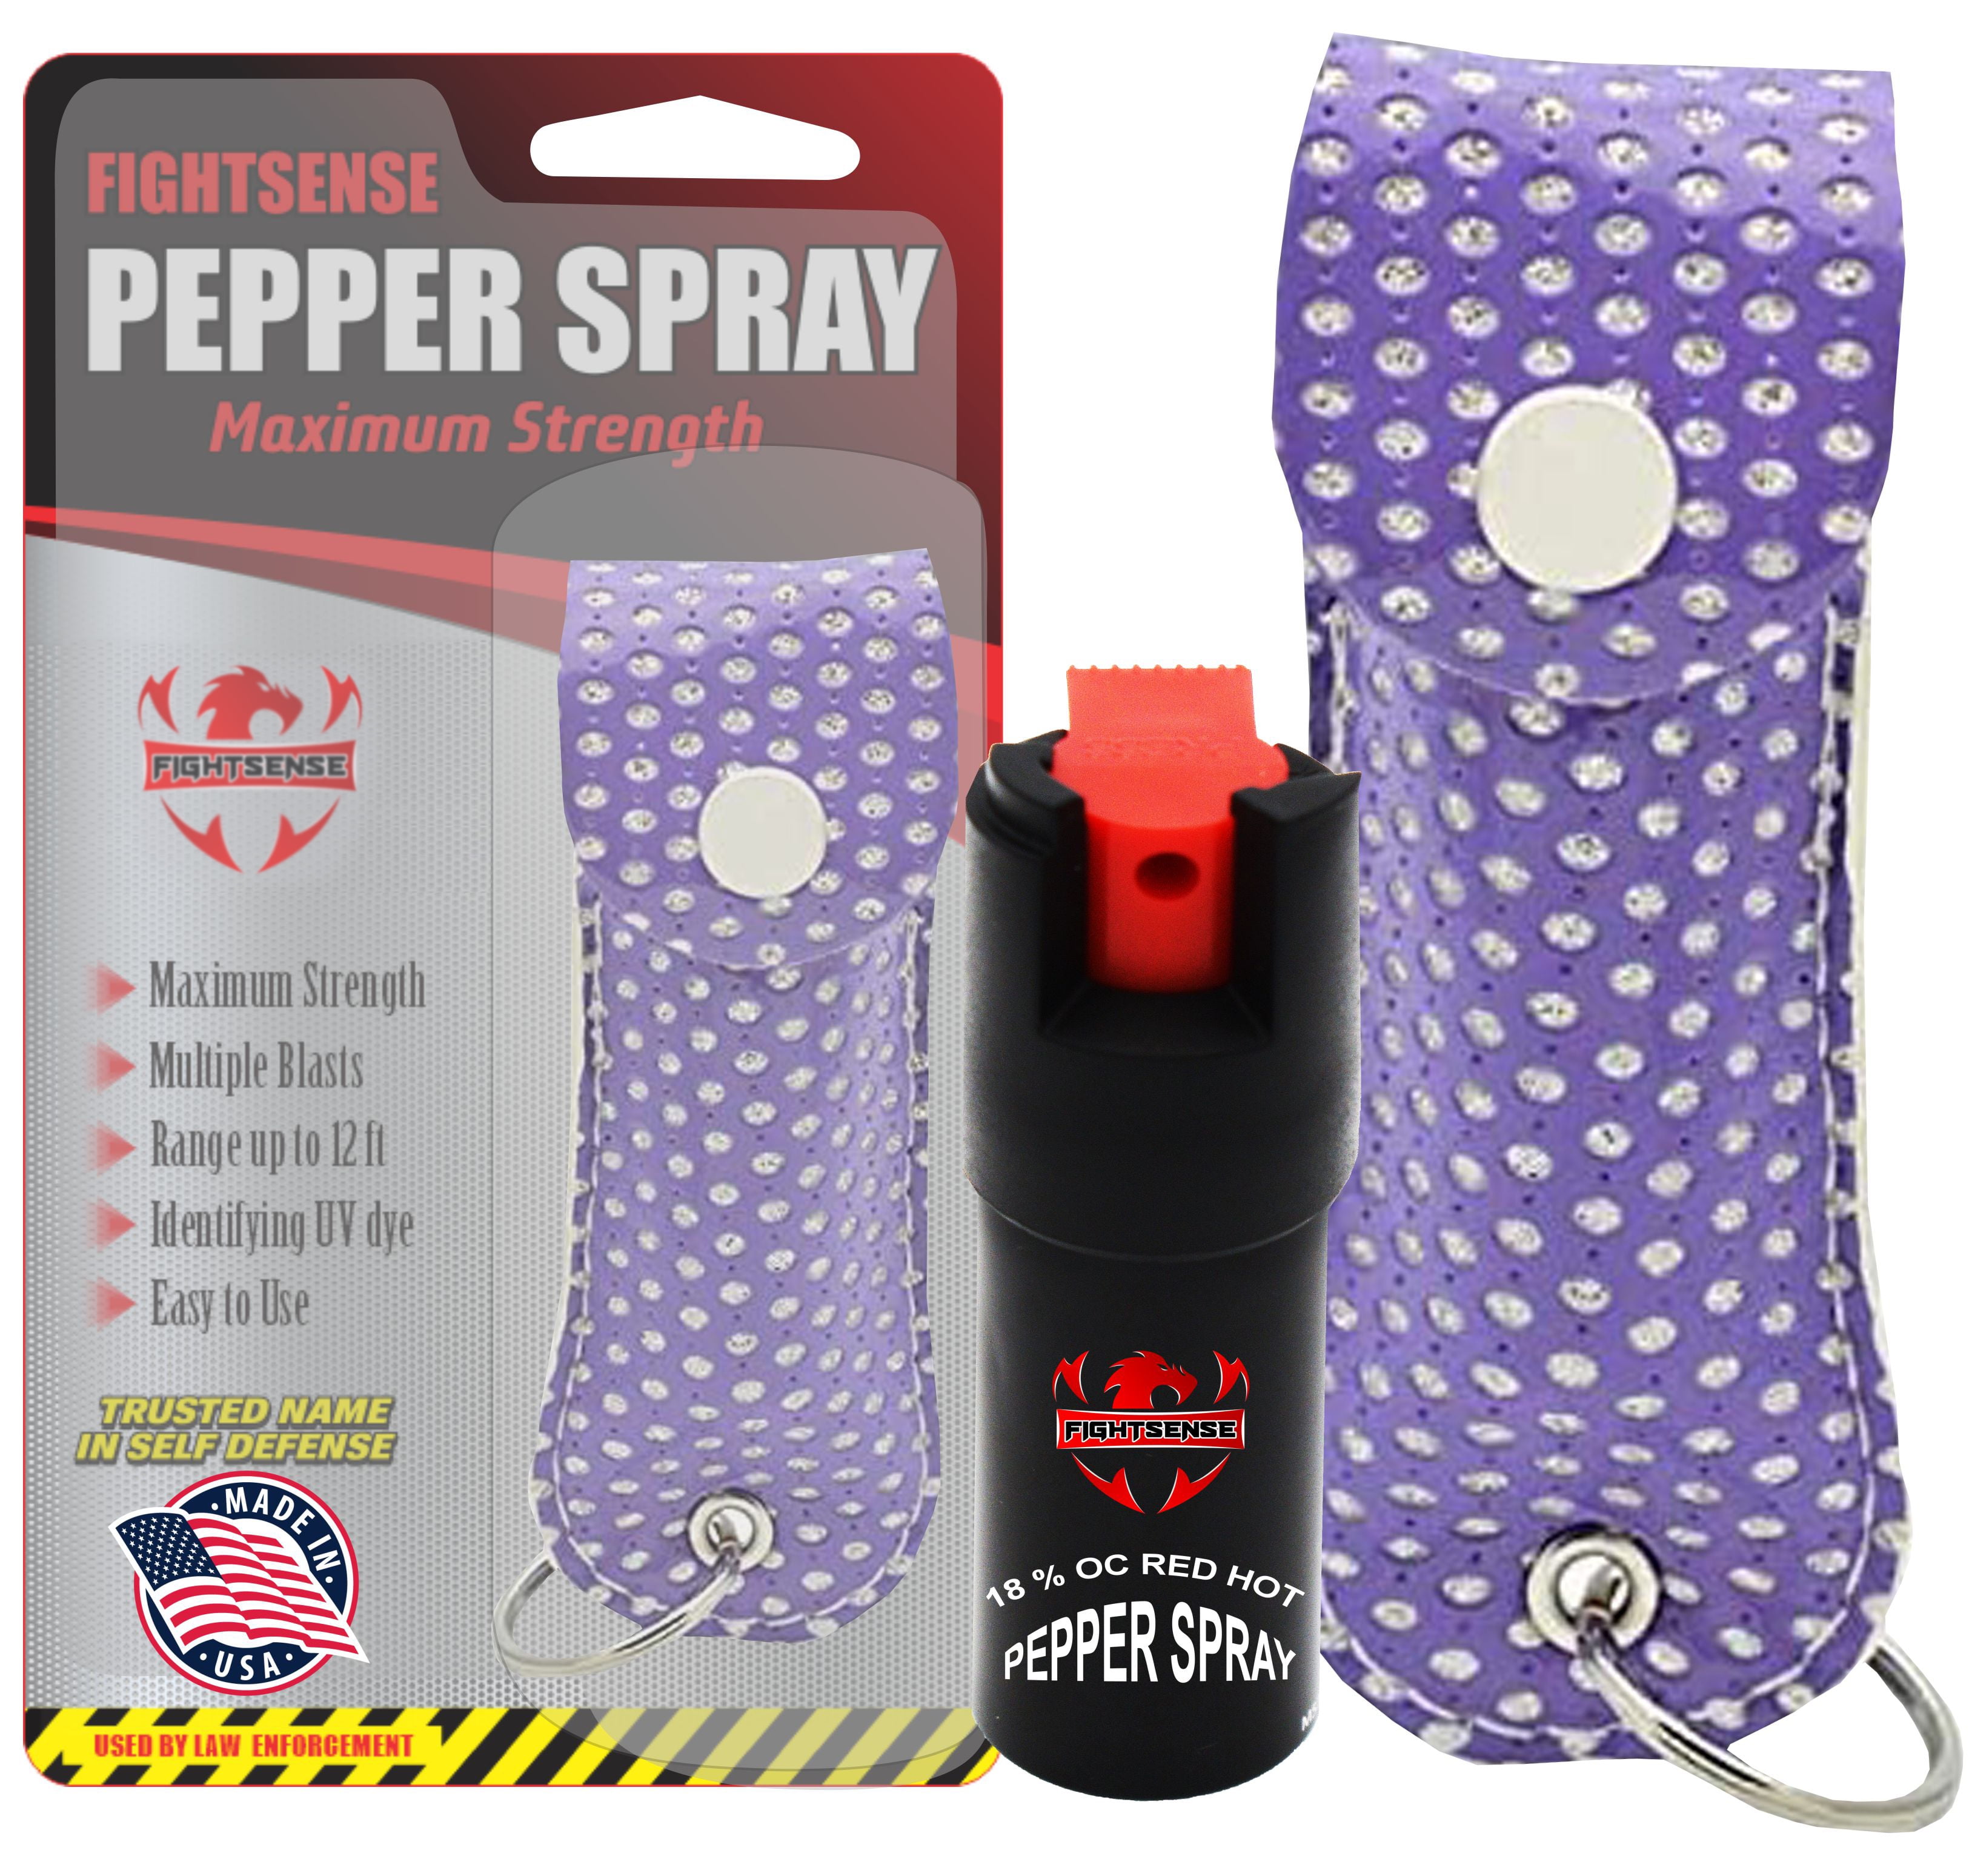 The 5 Best Pepper Sprays for Self Defense of 2023